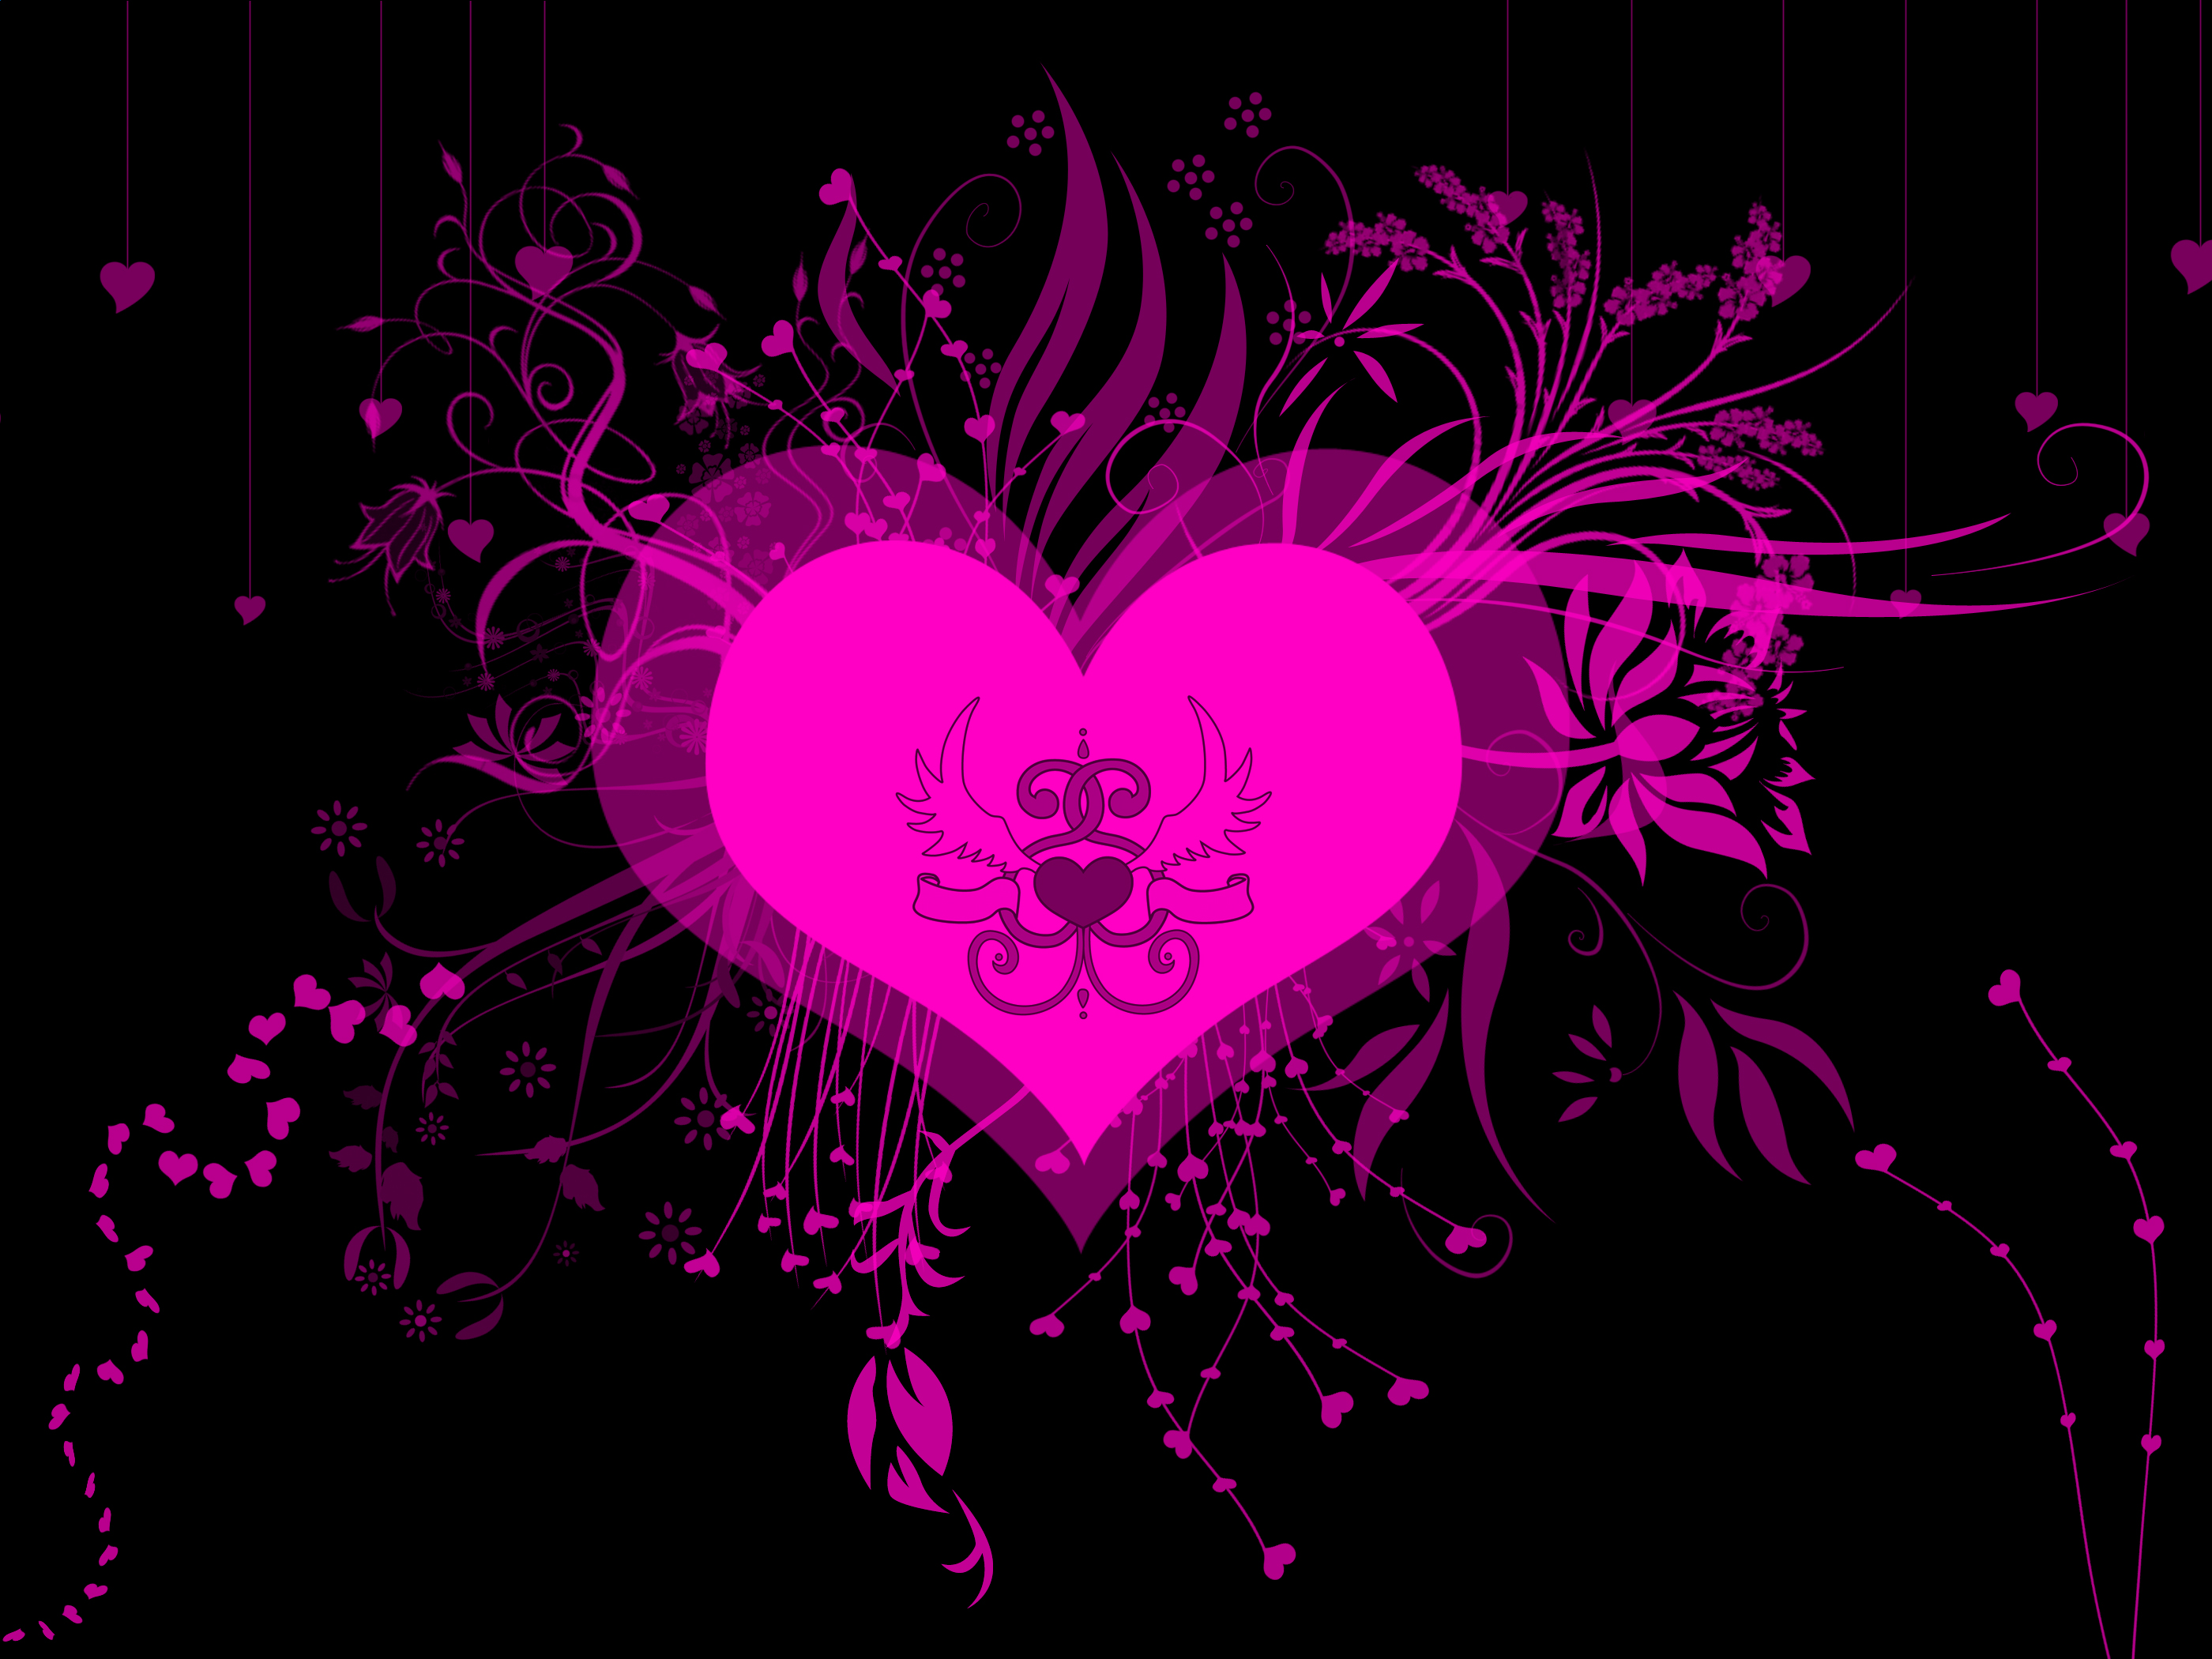 Бесплатное фото Розовое сердце